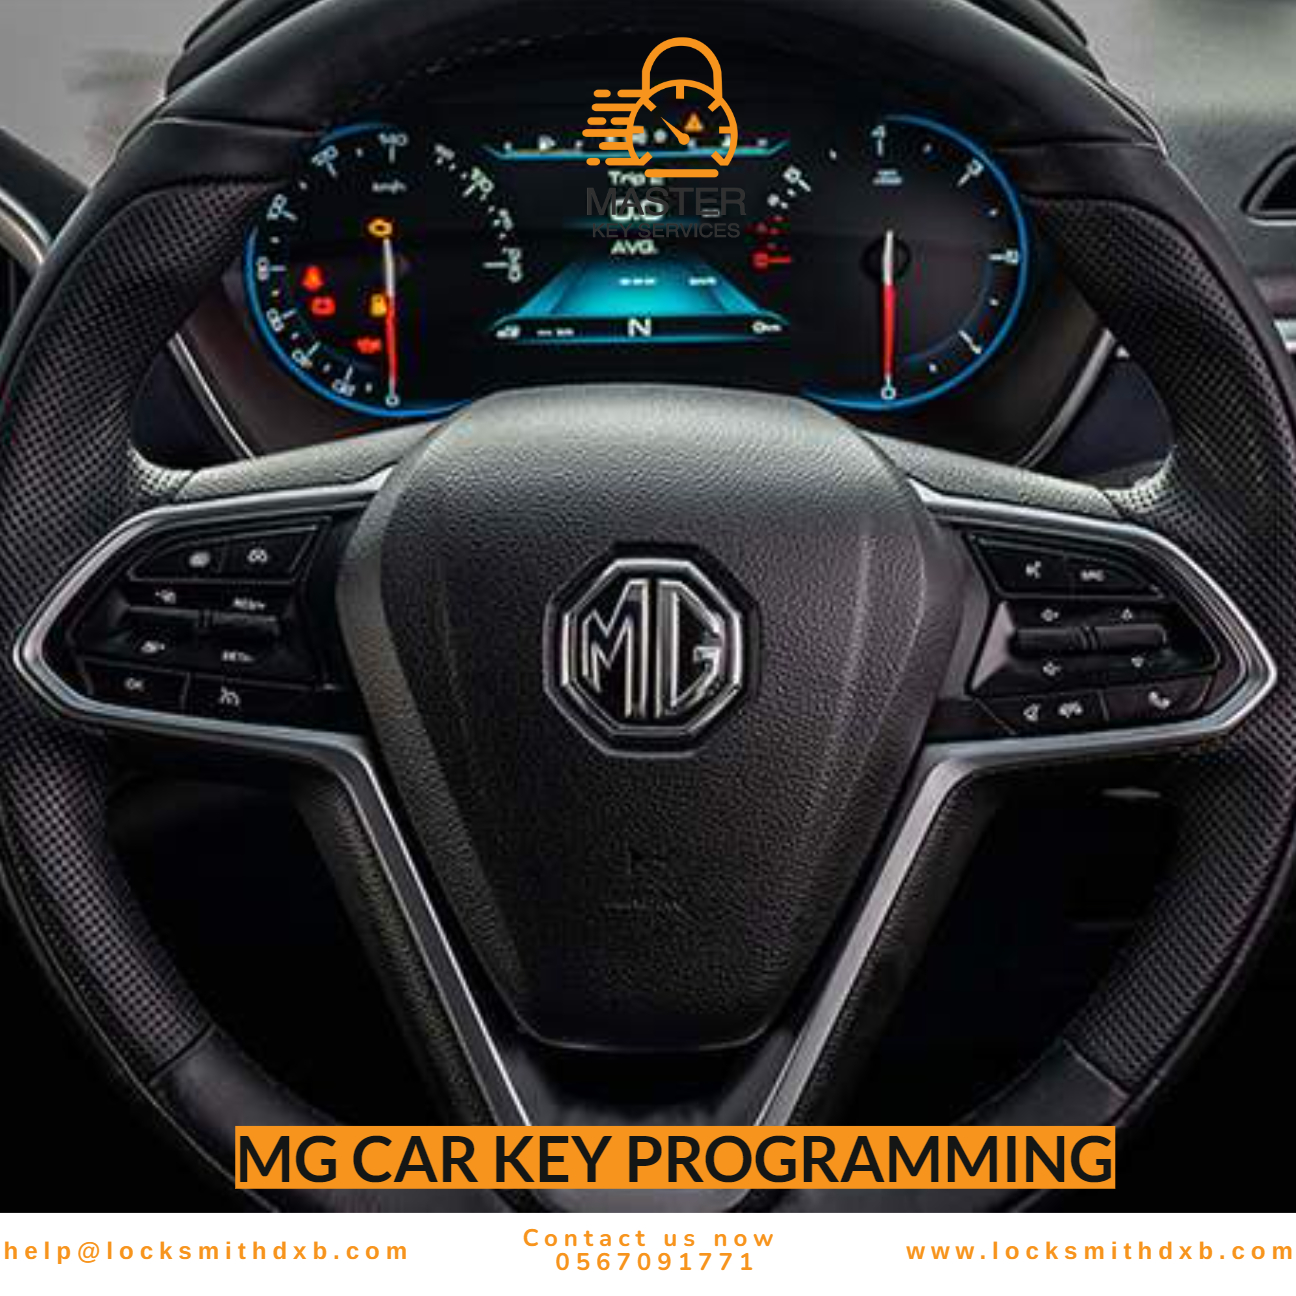 MG car key programming